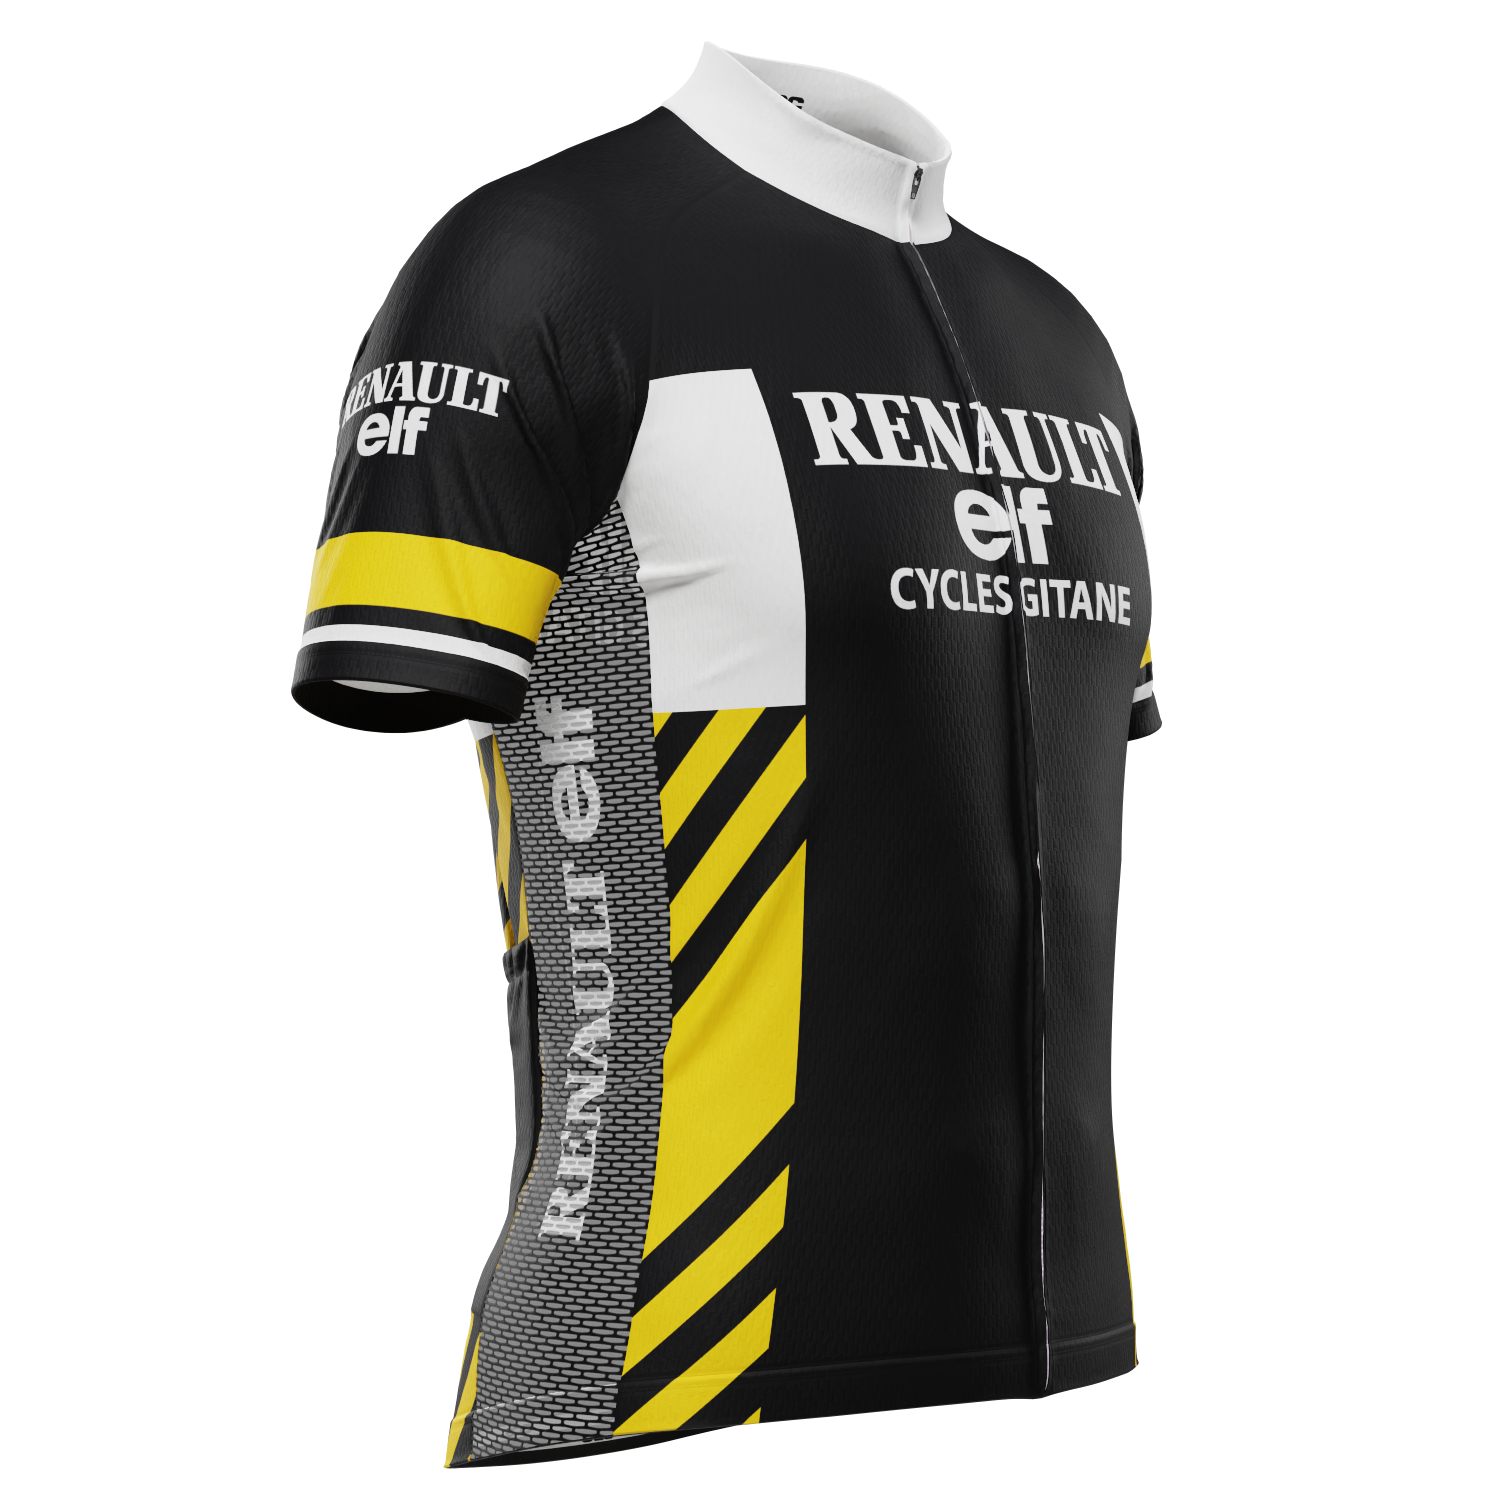 Men's Retro Auto Black Short Sleeve Cycling Jersey